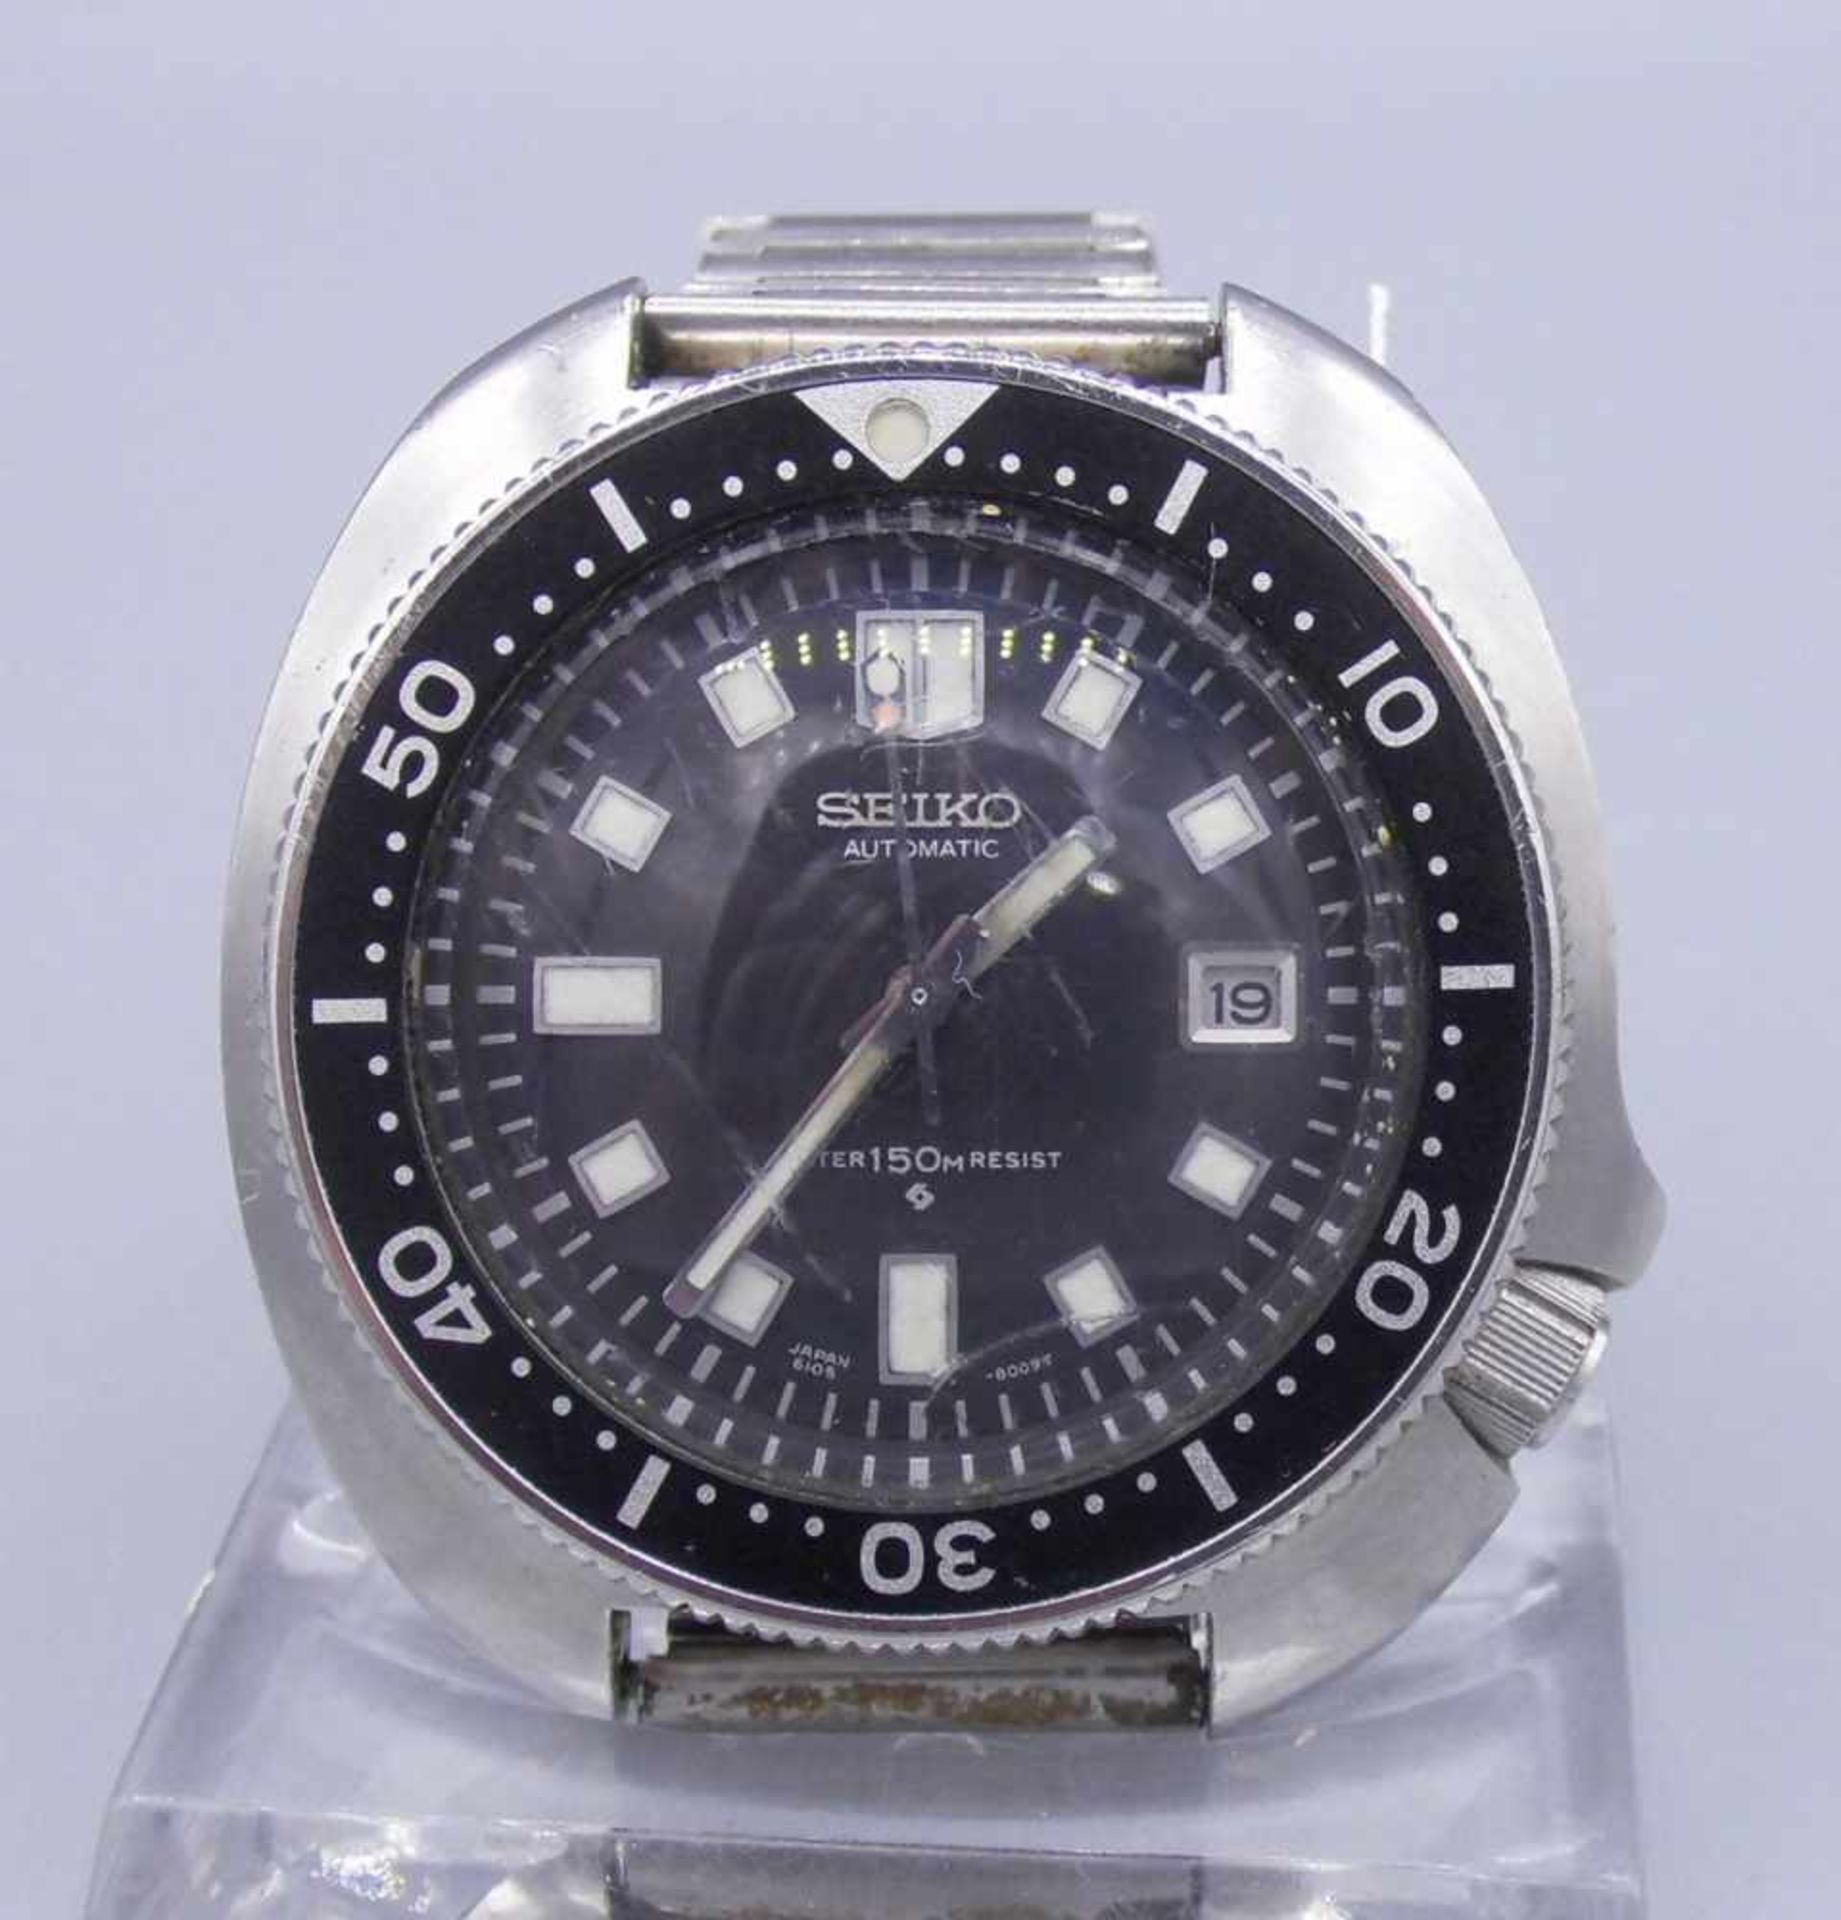 VINTAGE ARMBANDUHR / TAUCHERUHR: SEIKO / divers wristwatch, Automatik-Uhr, 1974, Japan, Stahlgehäuse